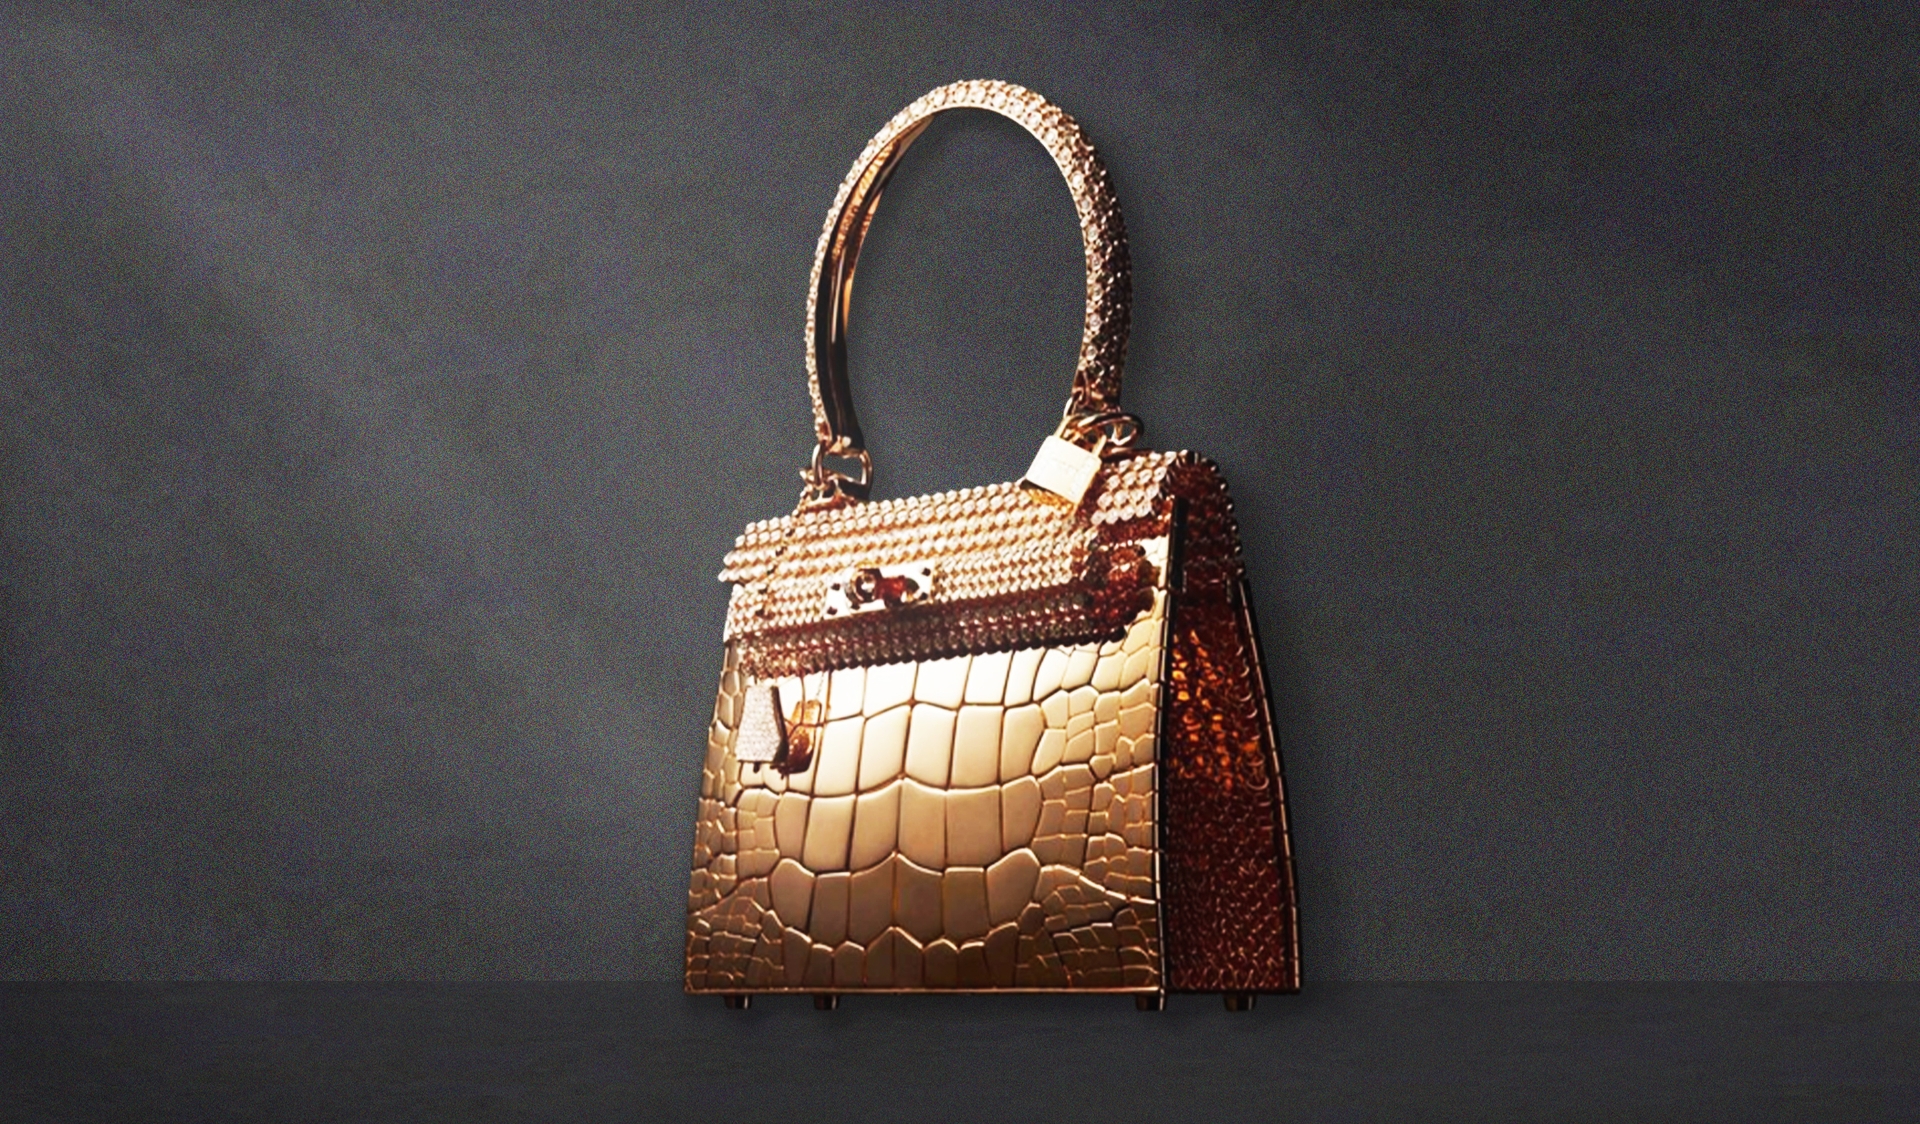 5. Hermes Kelly Rose Gold Bag - Harga $2 juta